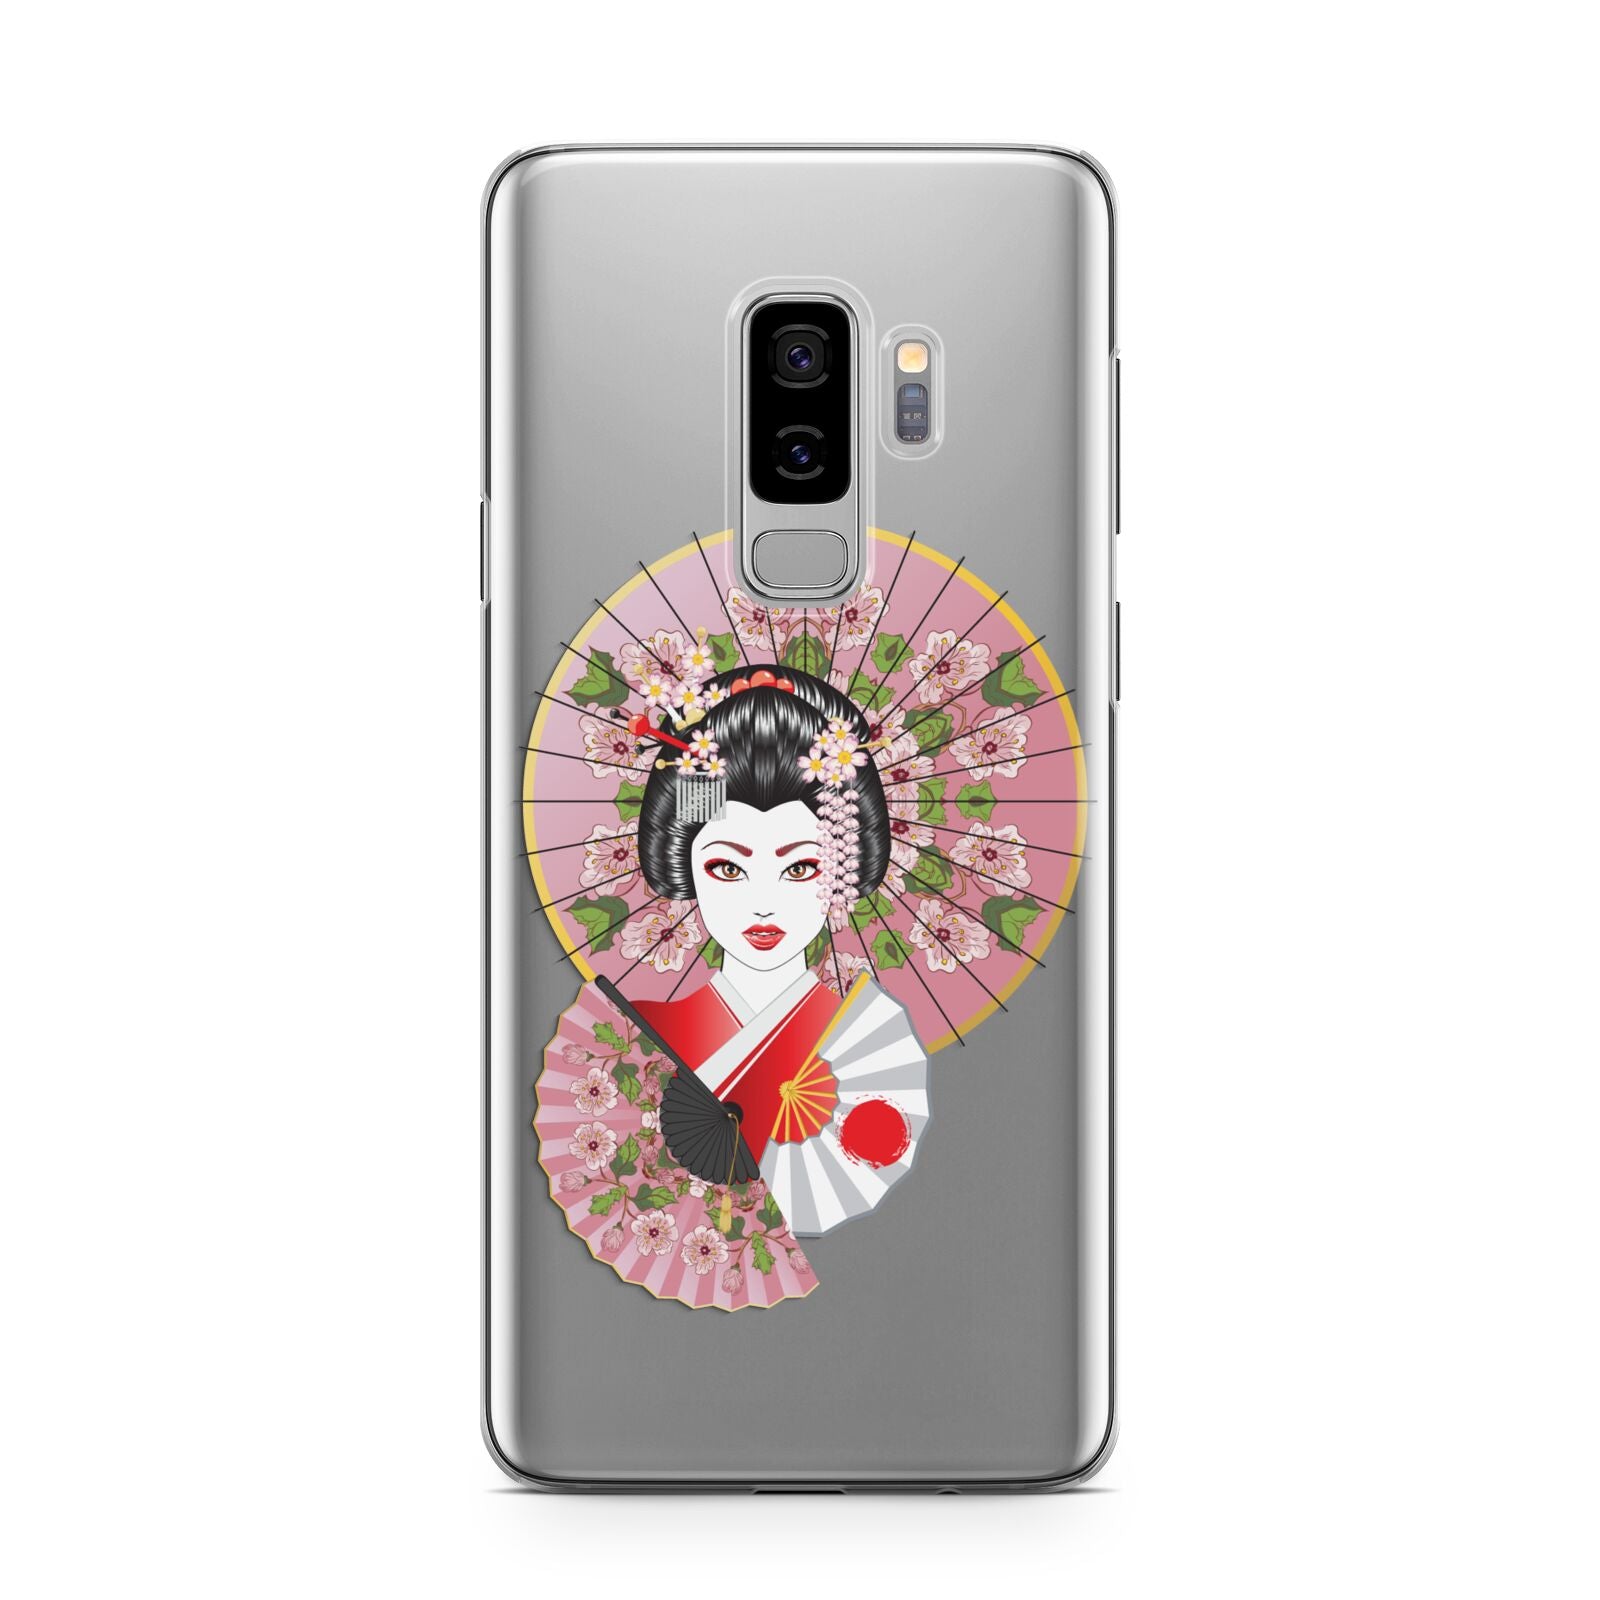 Geisha Girl Samsung Galaxy S9 Plus Case on Silver phone